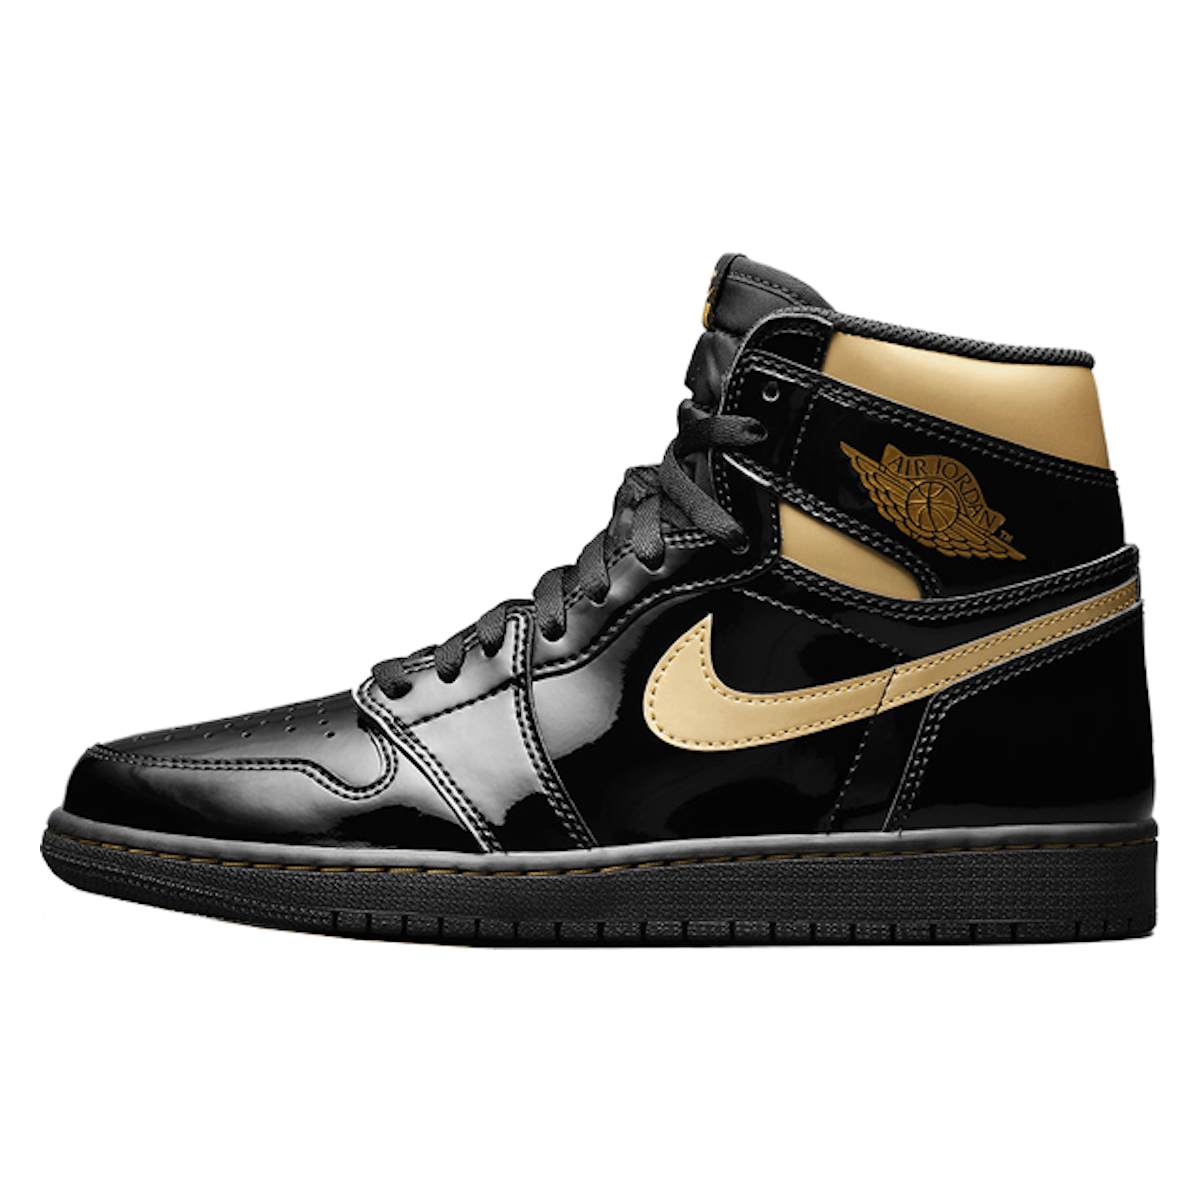 Air Jordan 1 Retro High OG "Black/Gold" Patent Leather